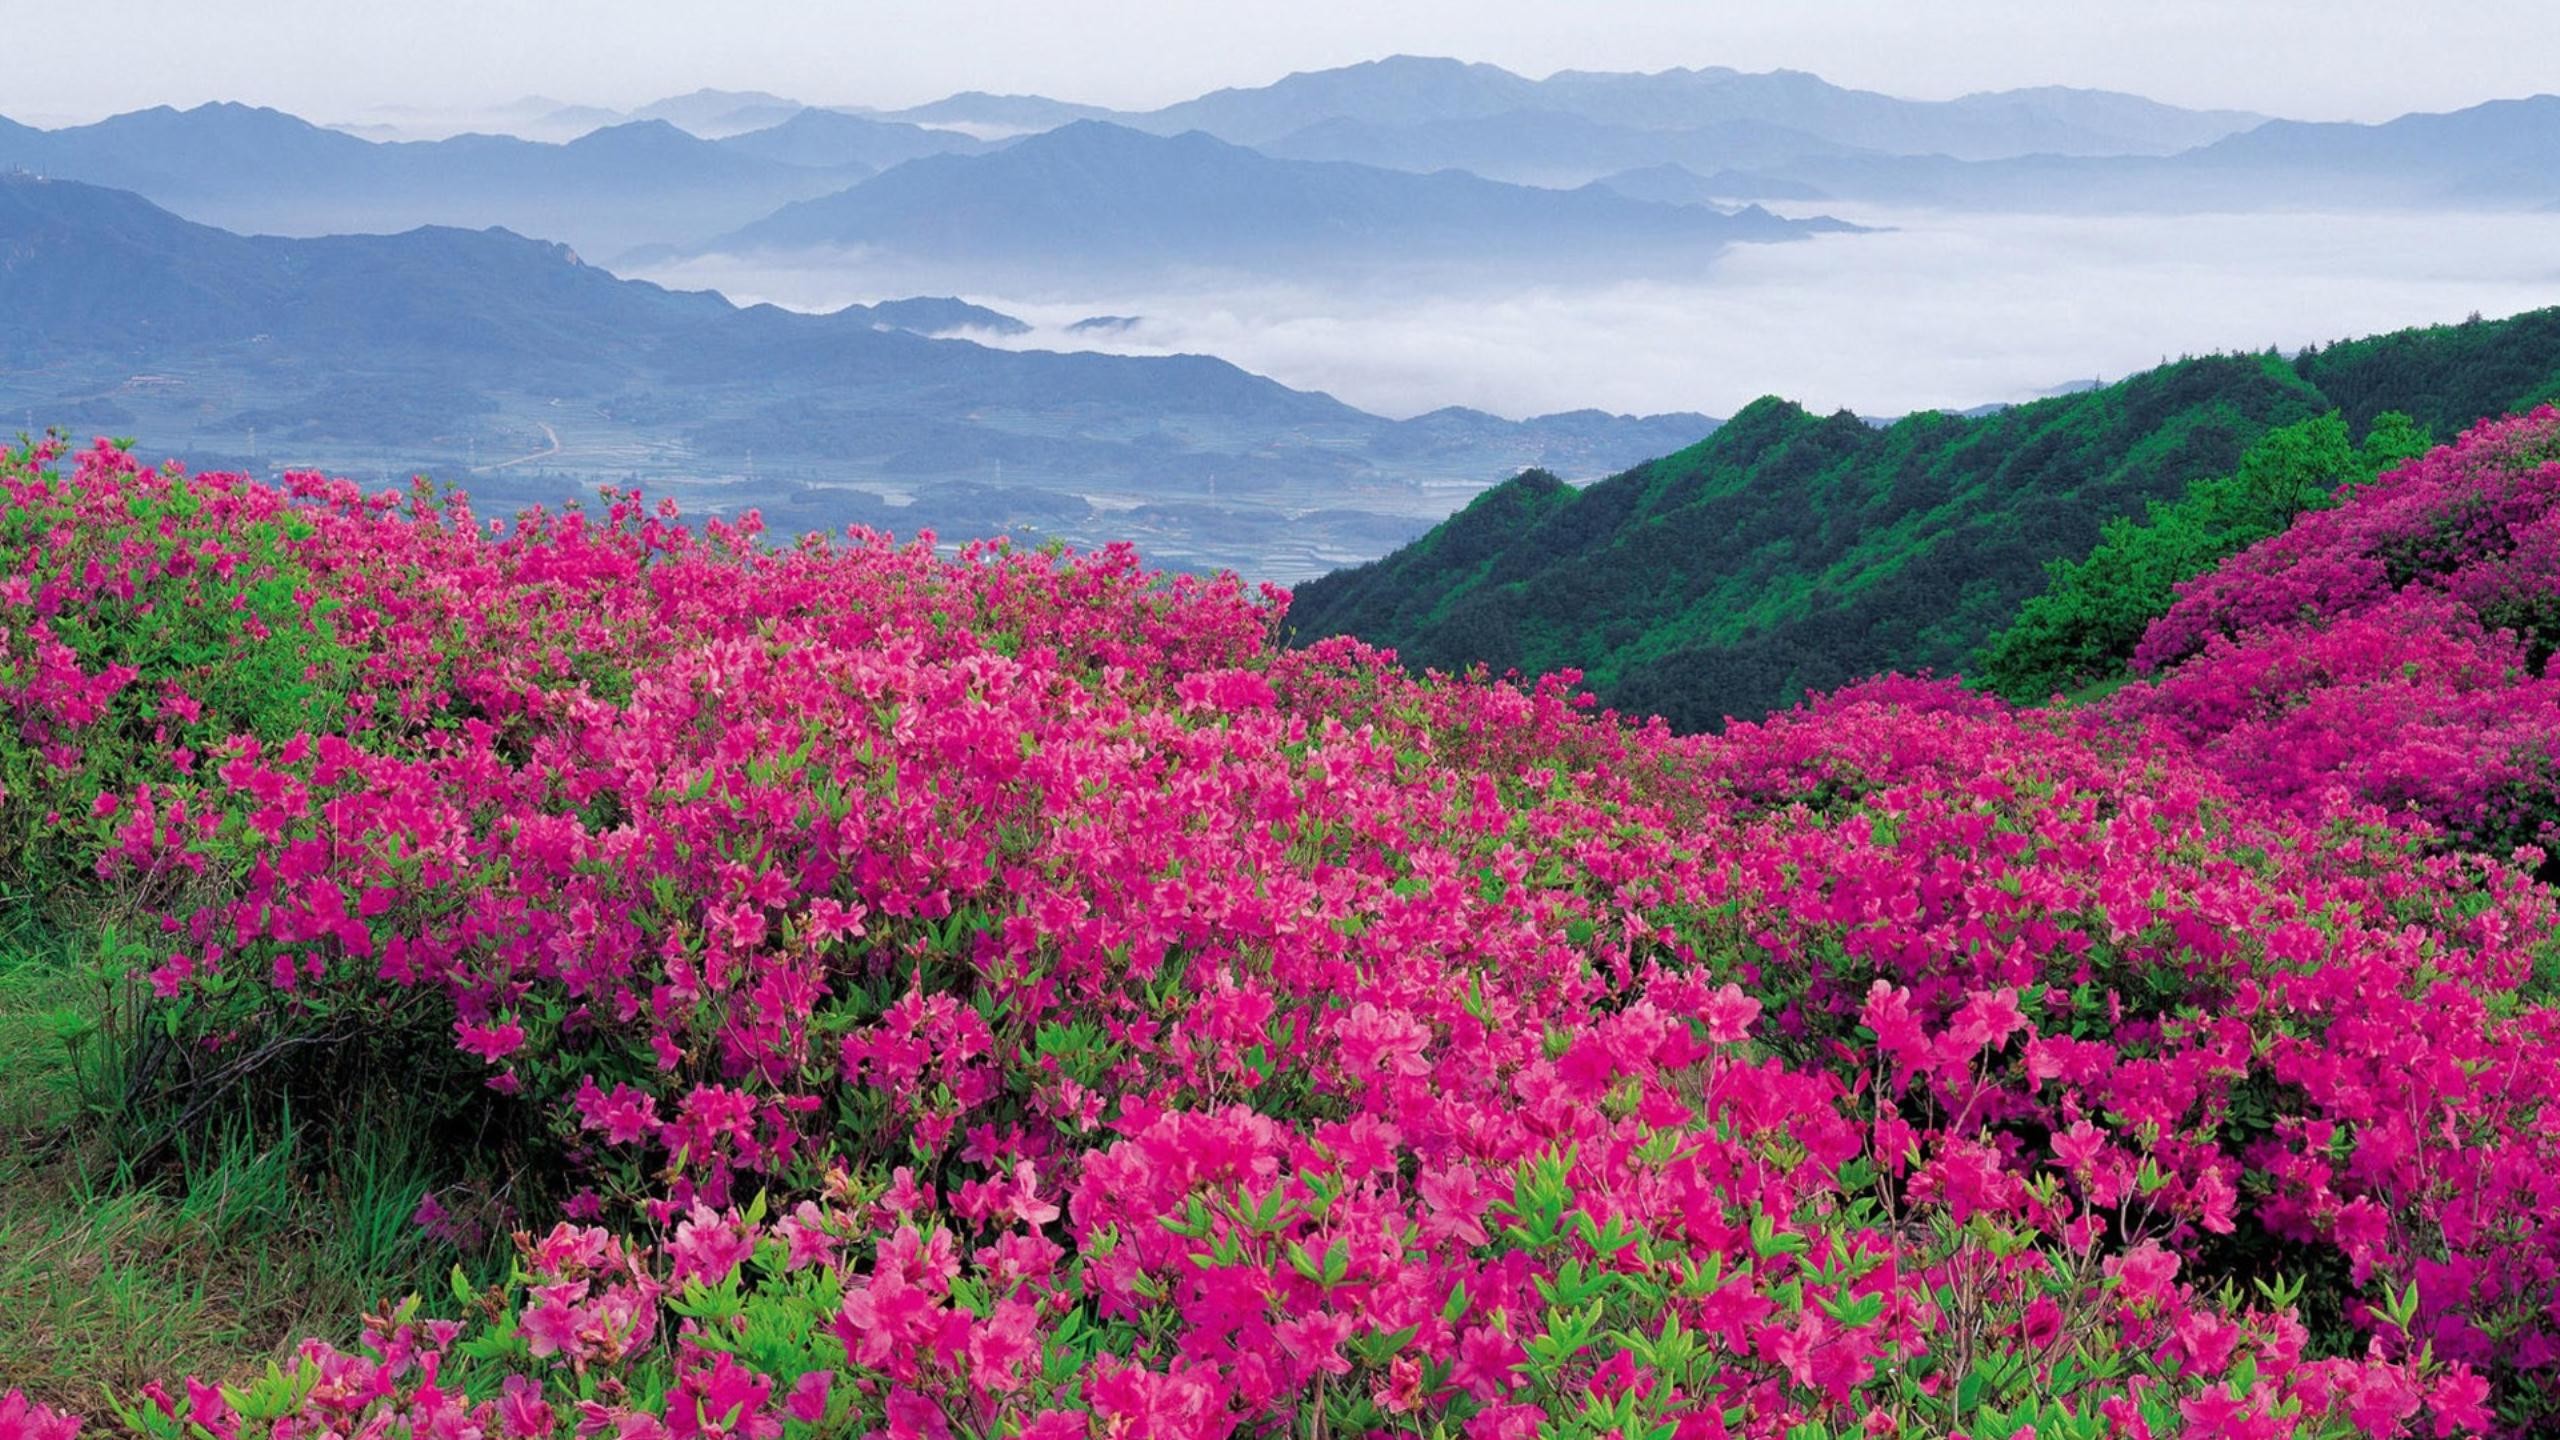 Заставка на телефон для женщин природа. Рододендрон Тибет. Казанлык Долина роз. Рододендрон в горах Монти-Сибиллини.